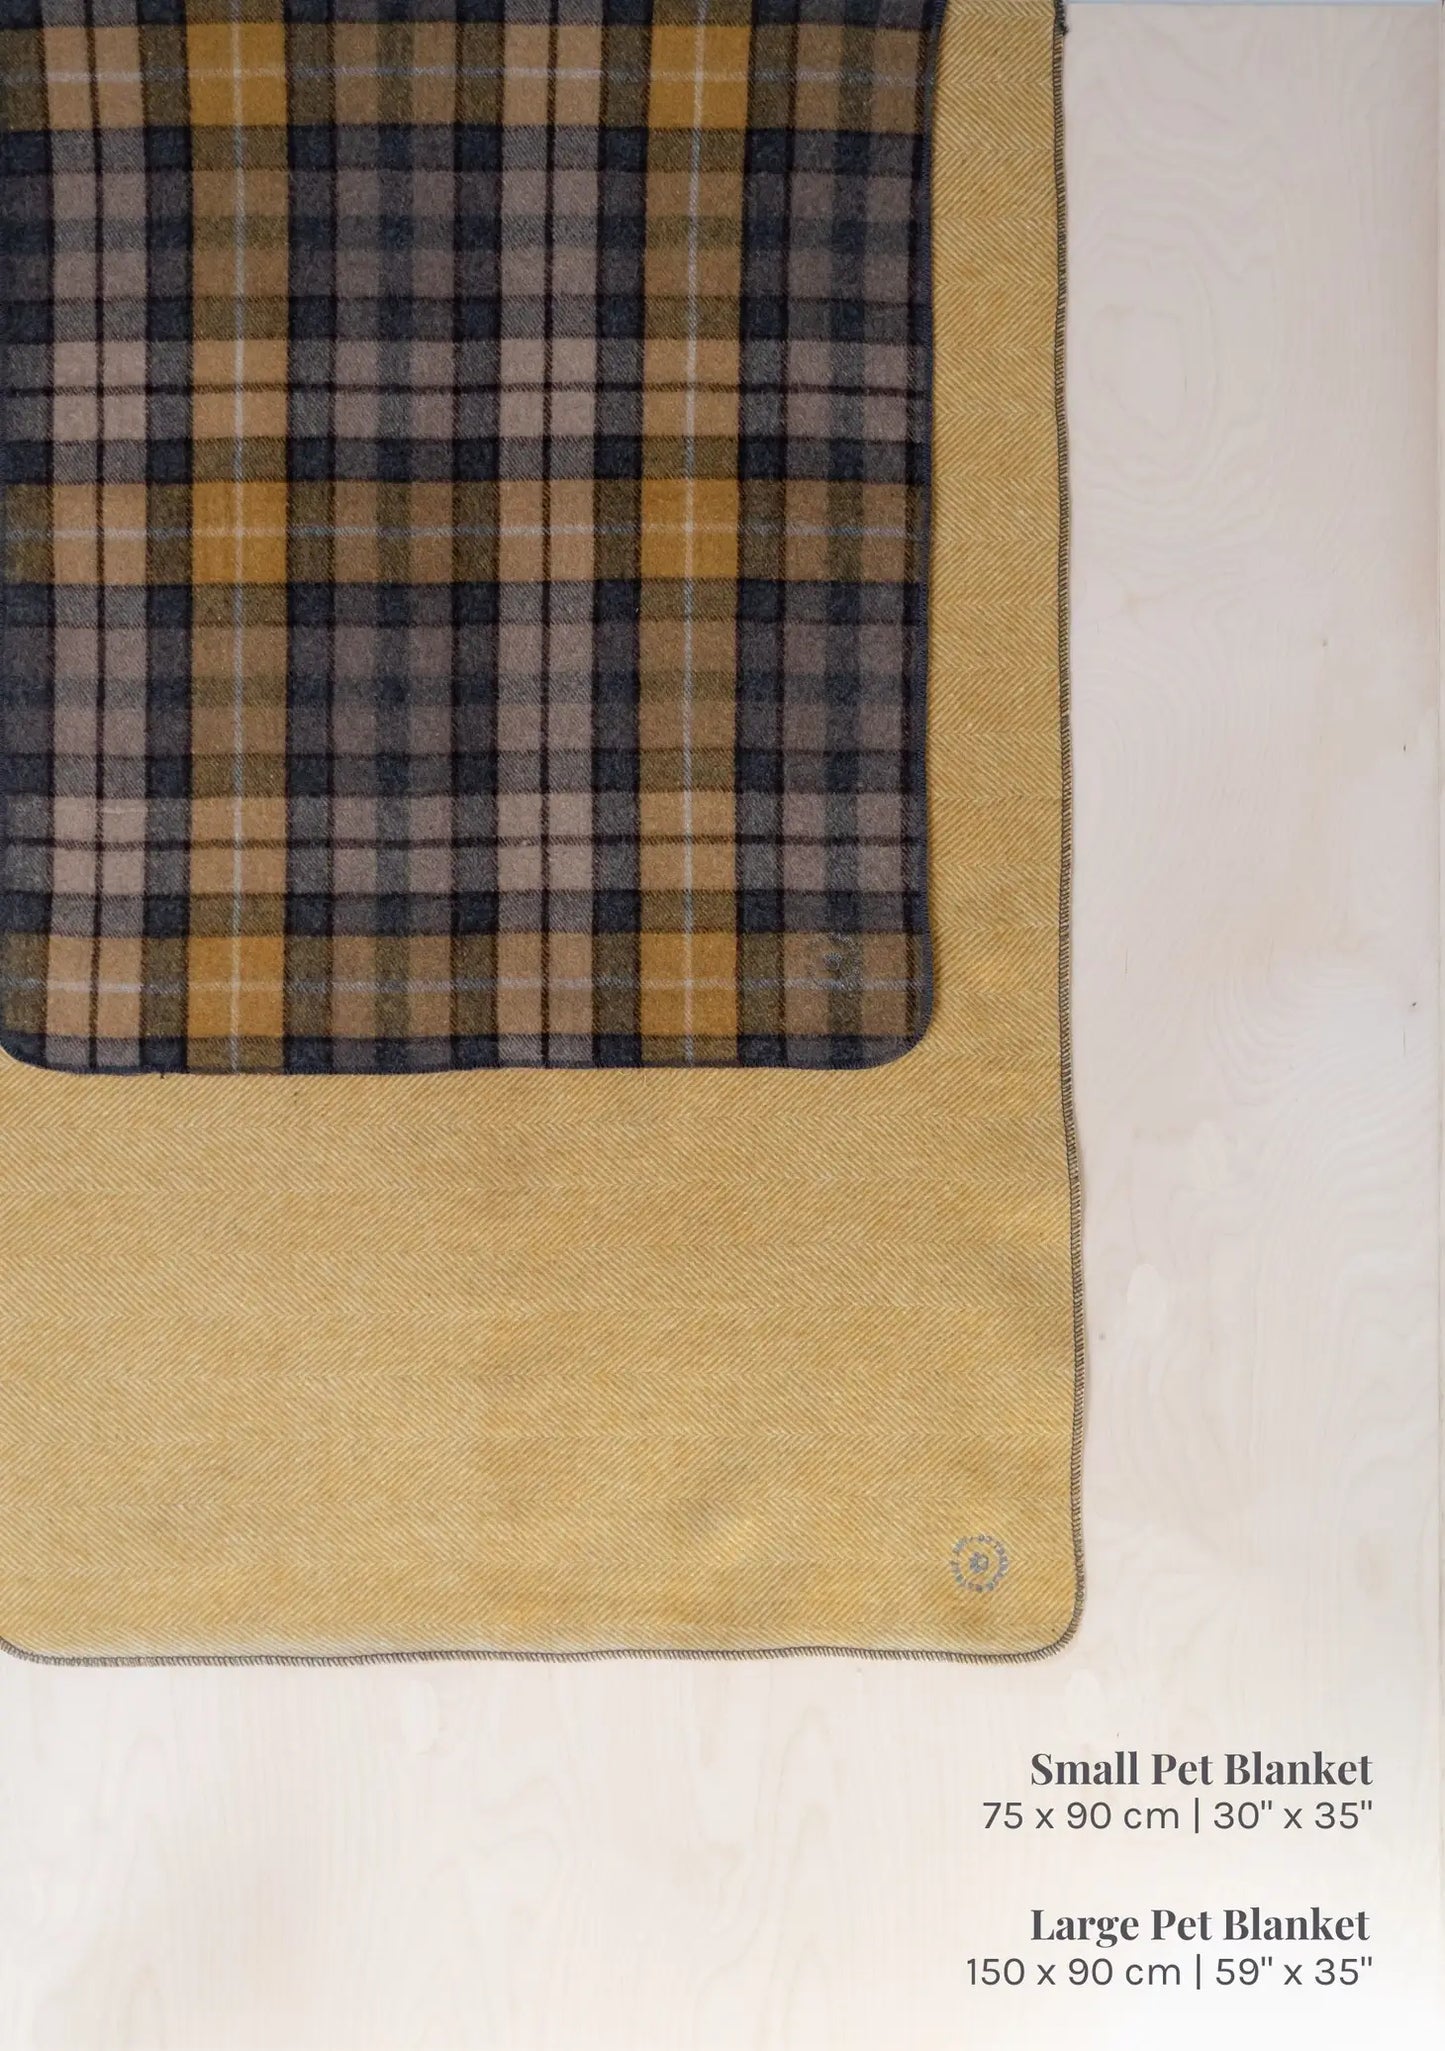 Recycled Wool Small Pet Blanket in  Charcoal Herringbone